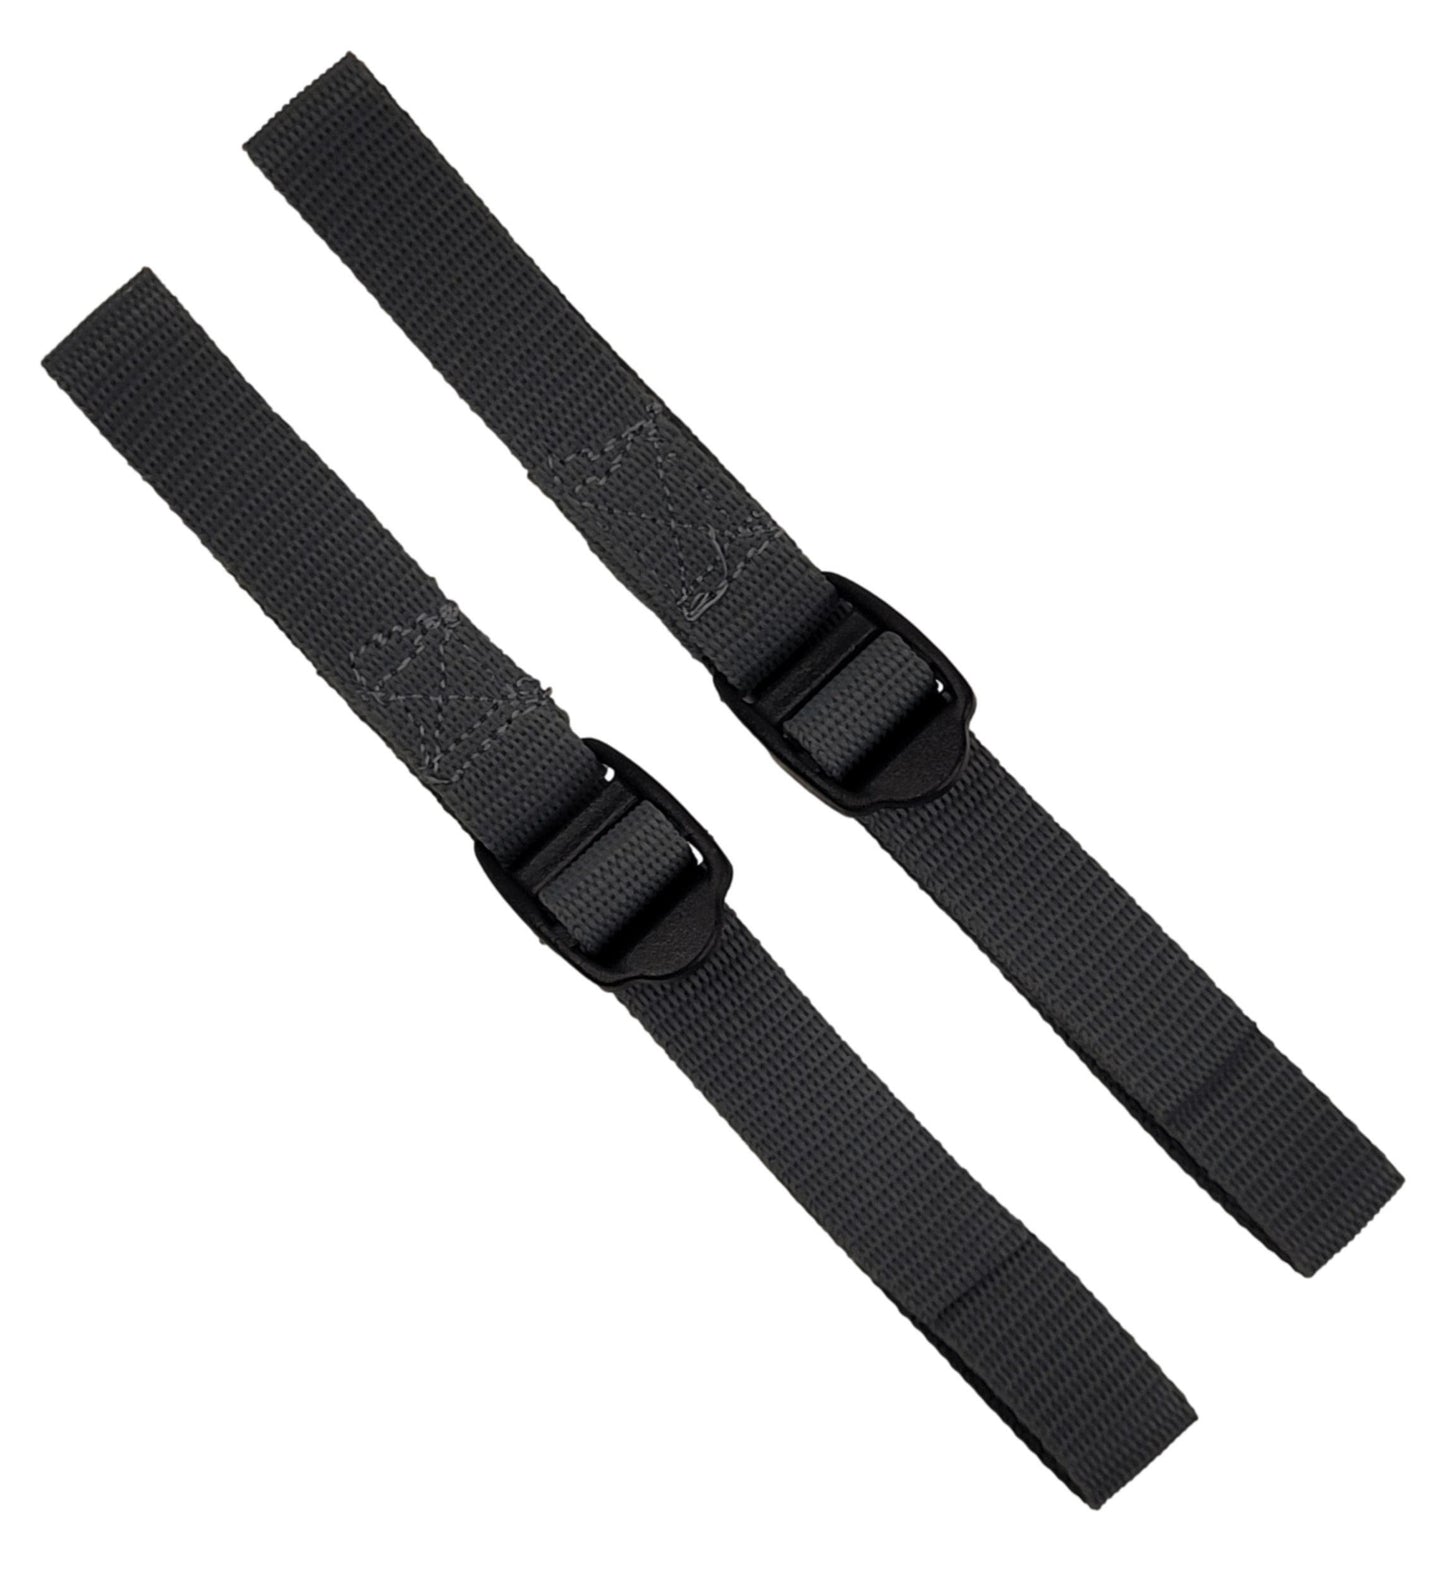 19mm webbing strap in grey with ladderlock buckle (pair) (4)